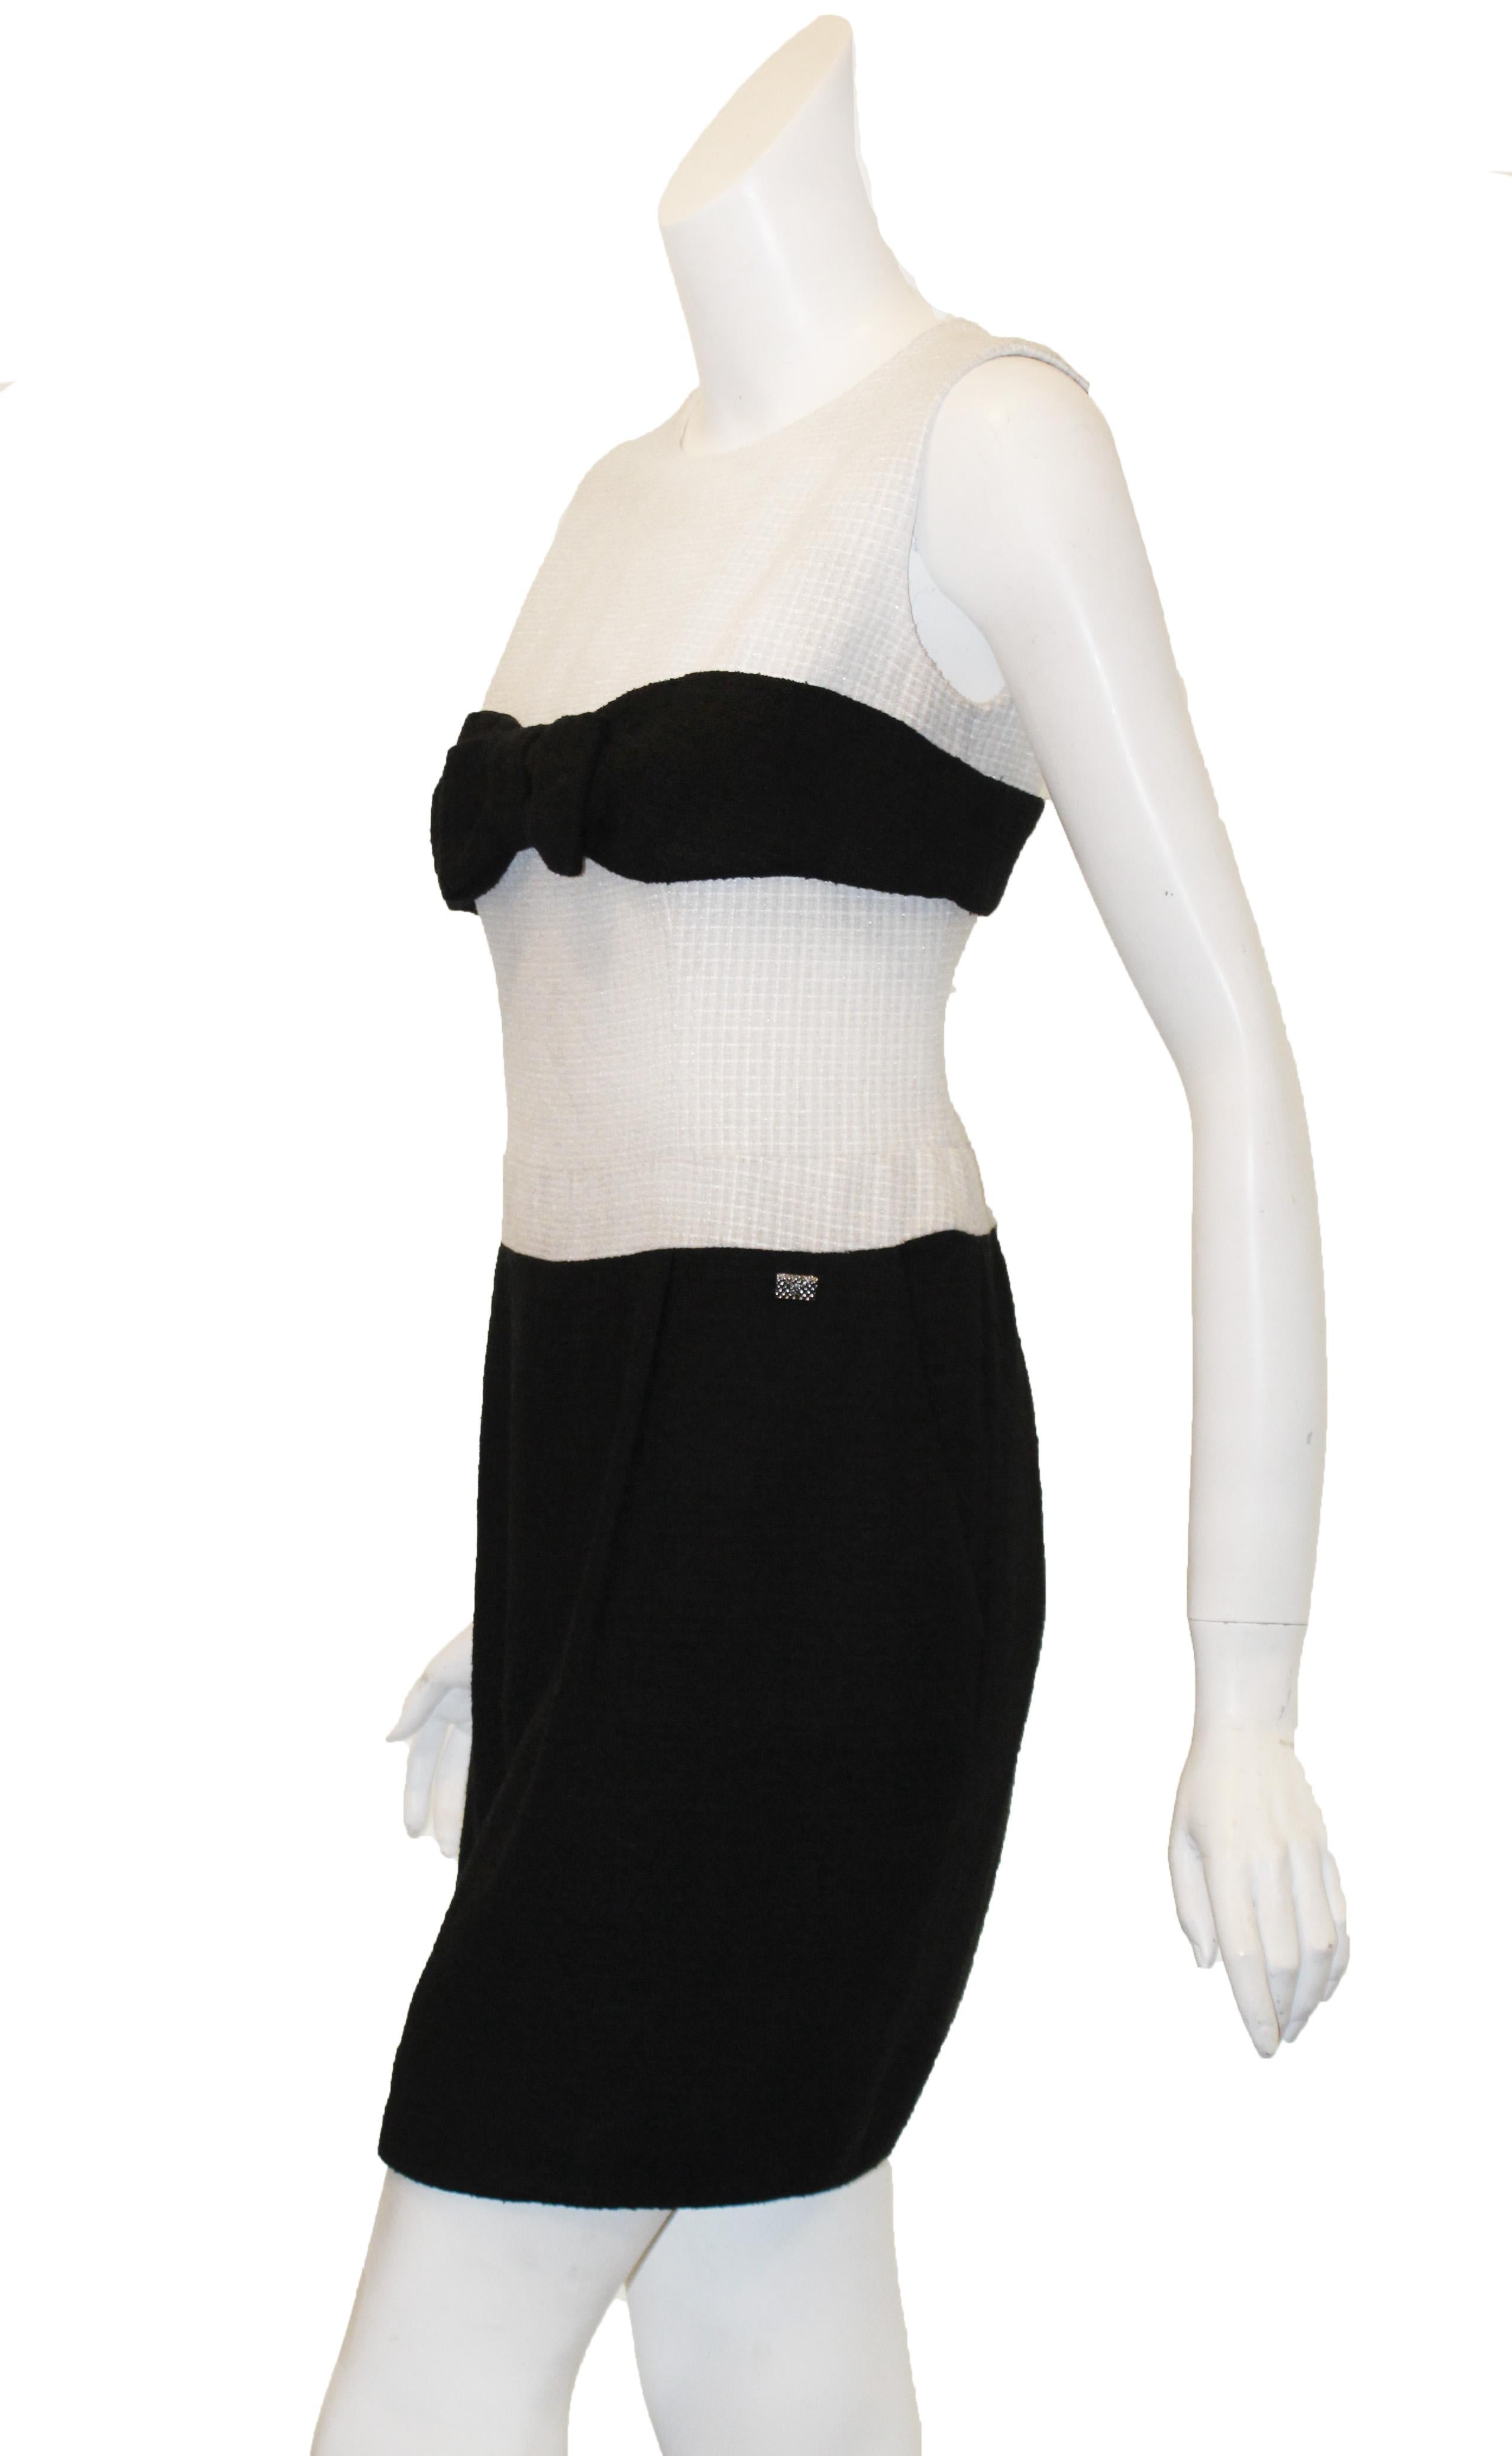 Chanel 2009 Black & Ivory Tweed Dress & Jacket Suit W/ Bow Accent on Dress (Weiß) im Angebot